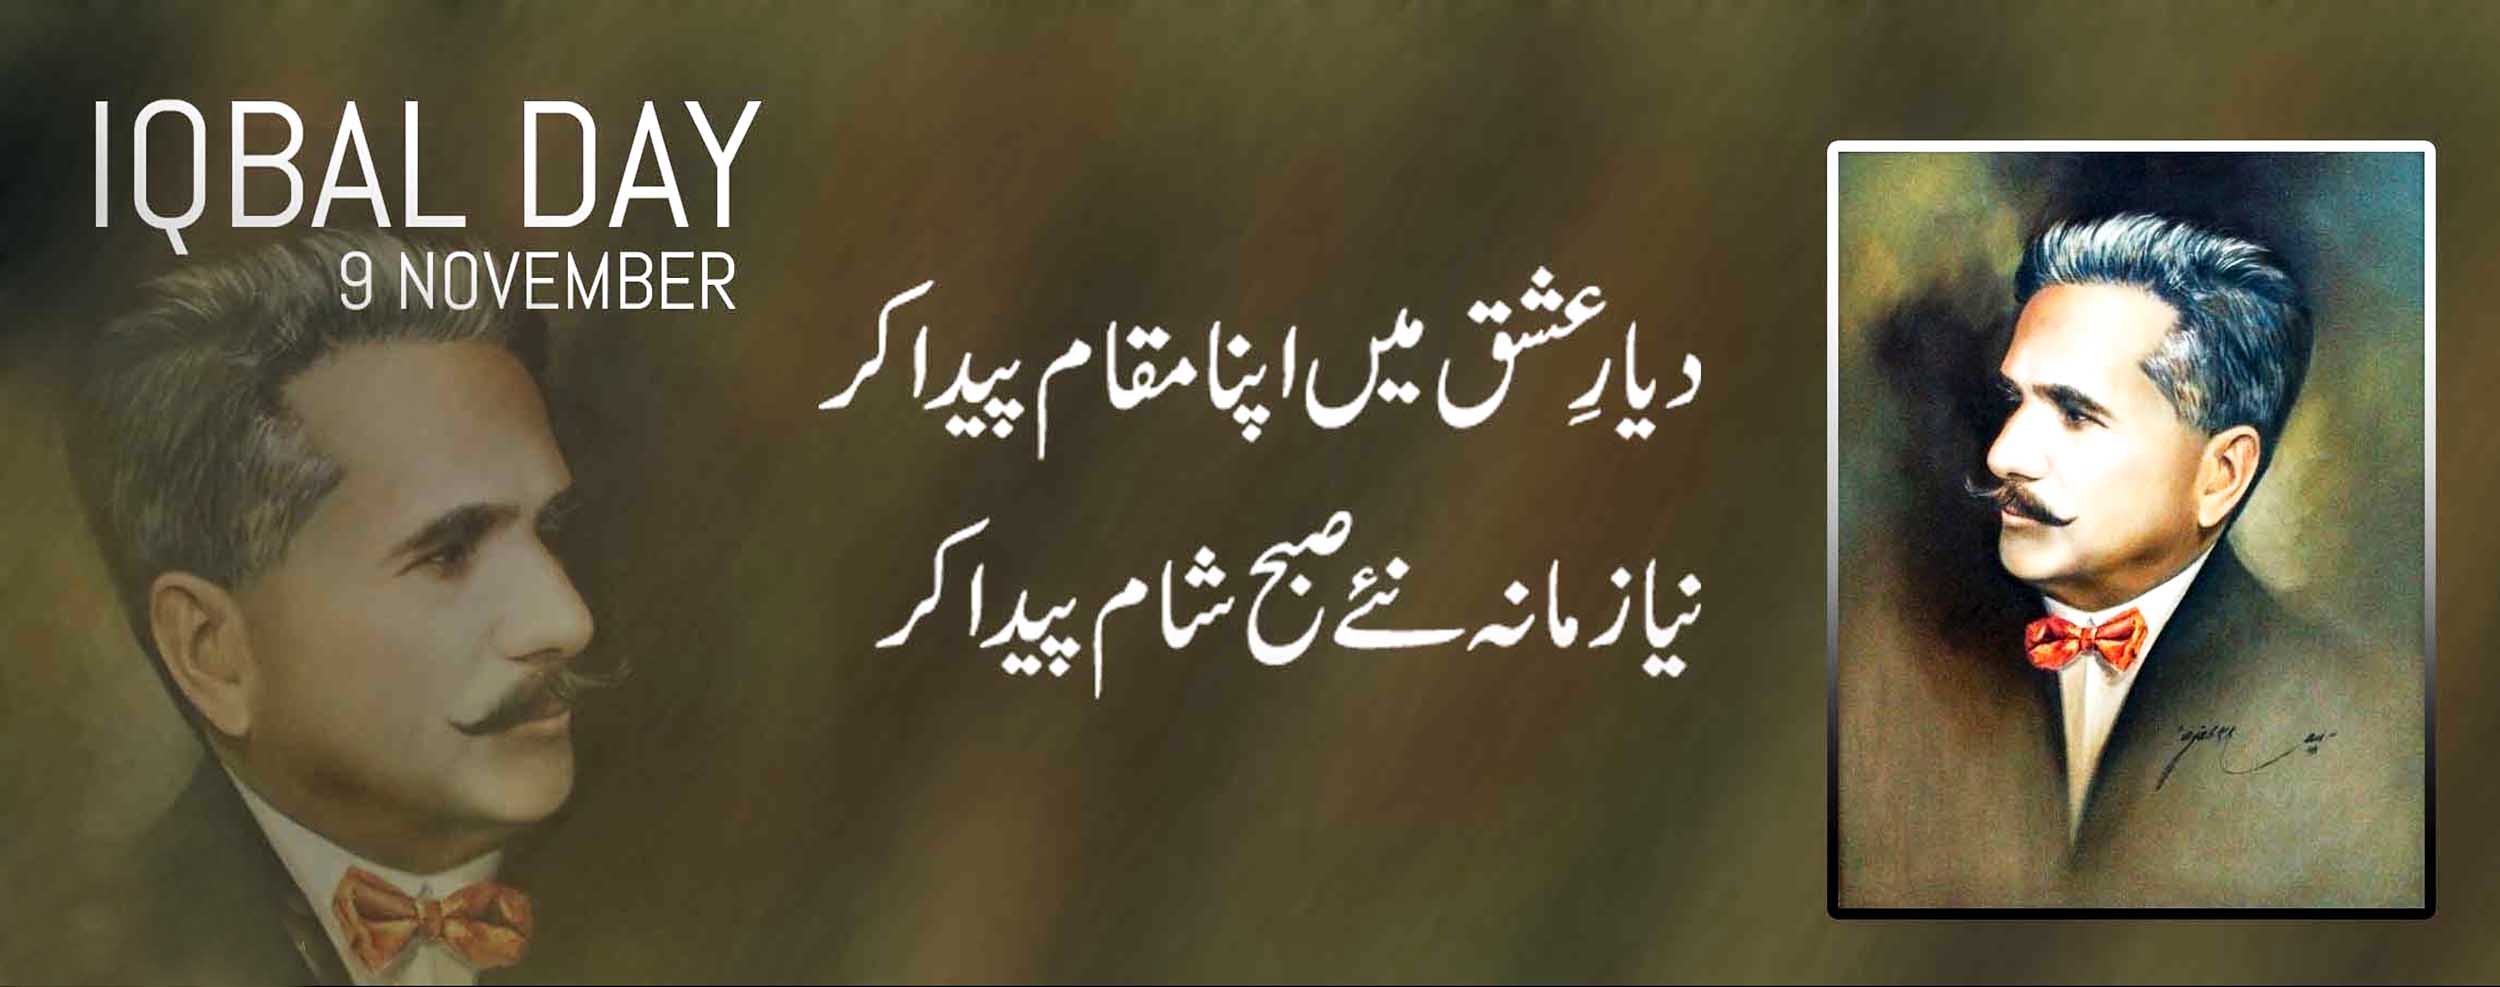 iqbal day speech english